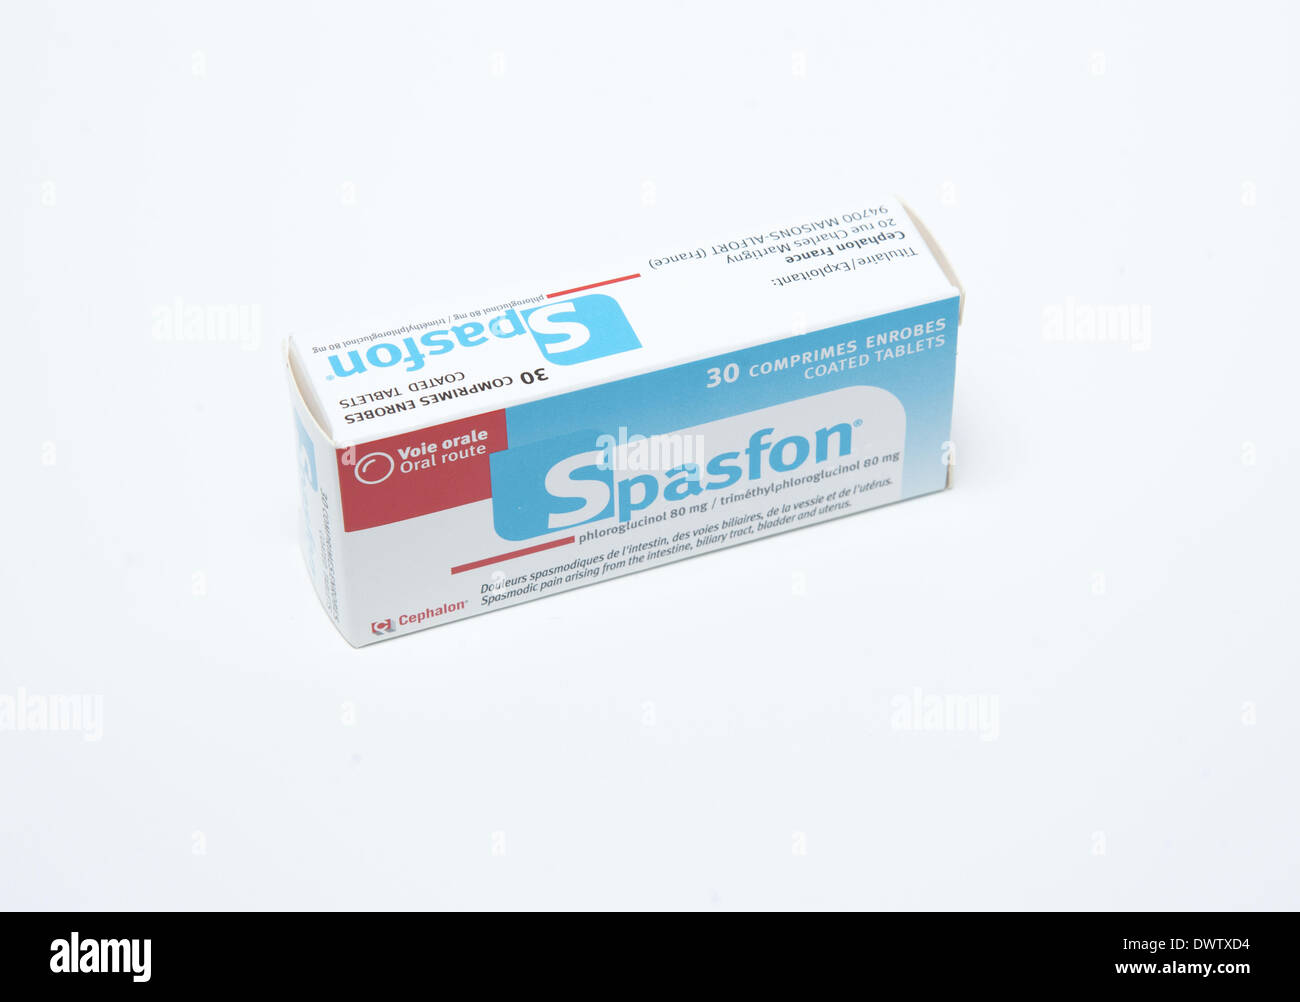 Spasfon Stock Photo